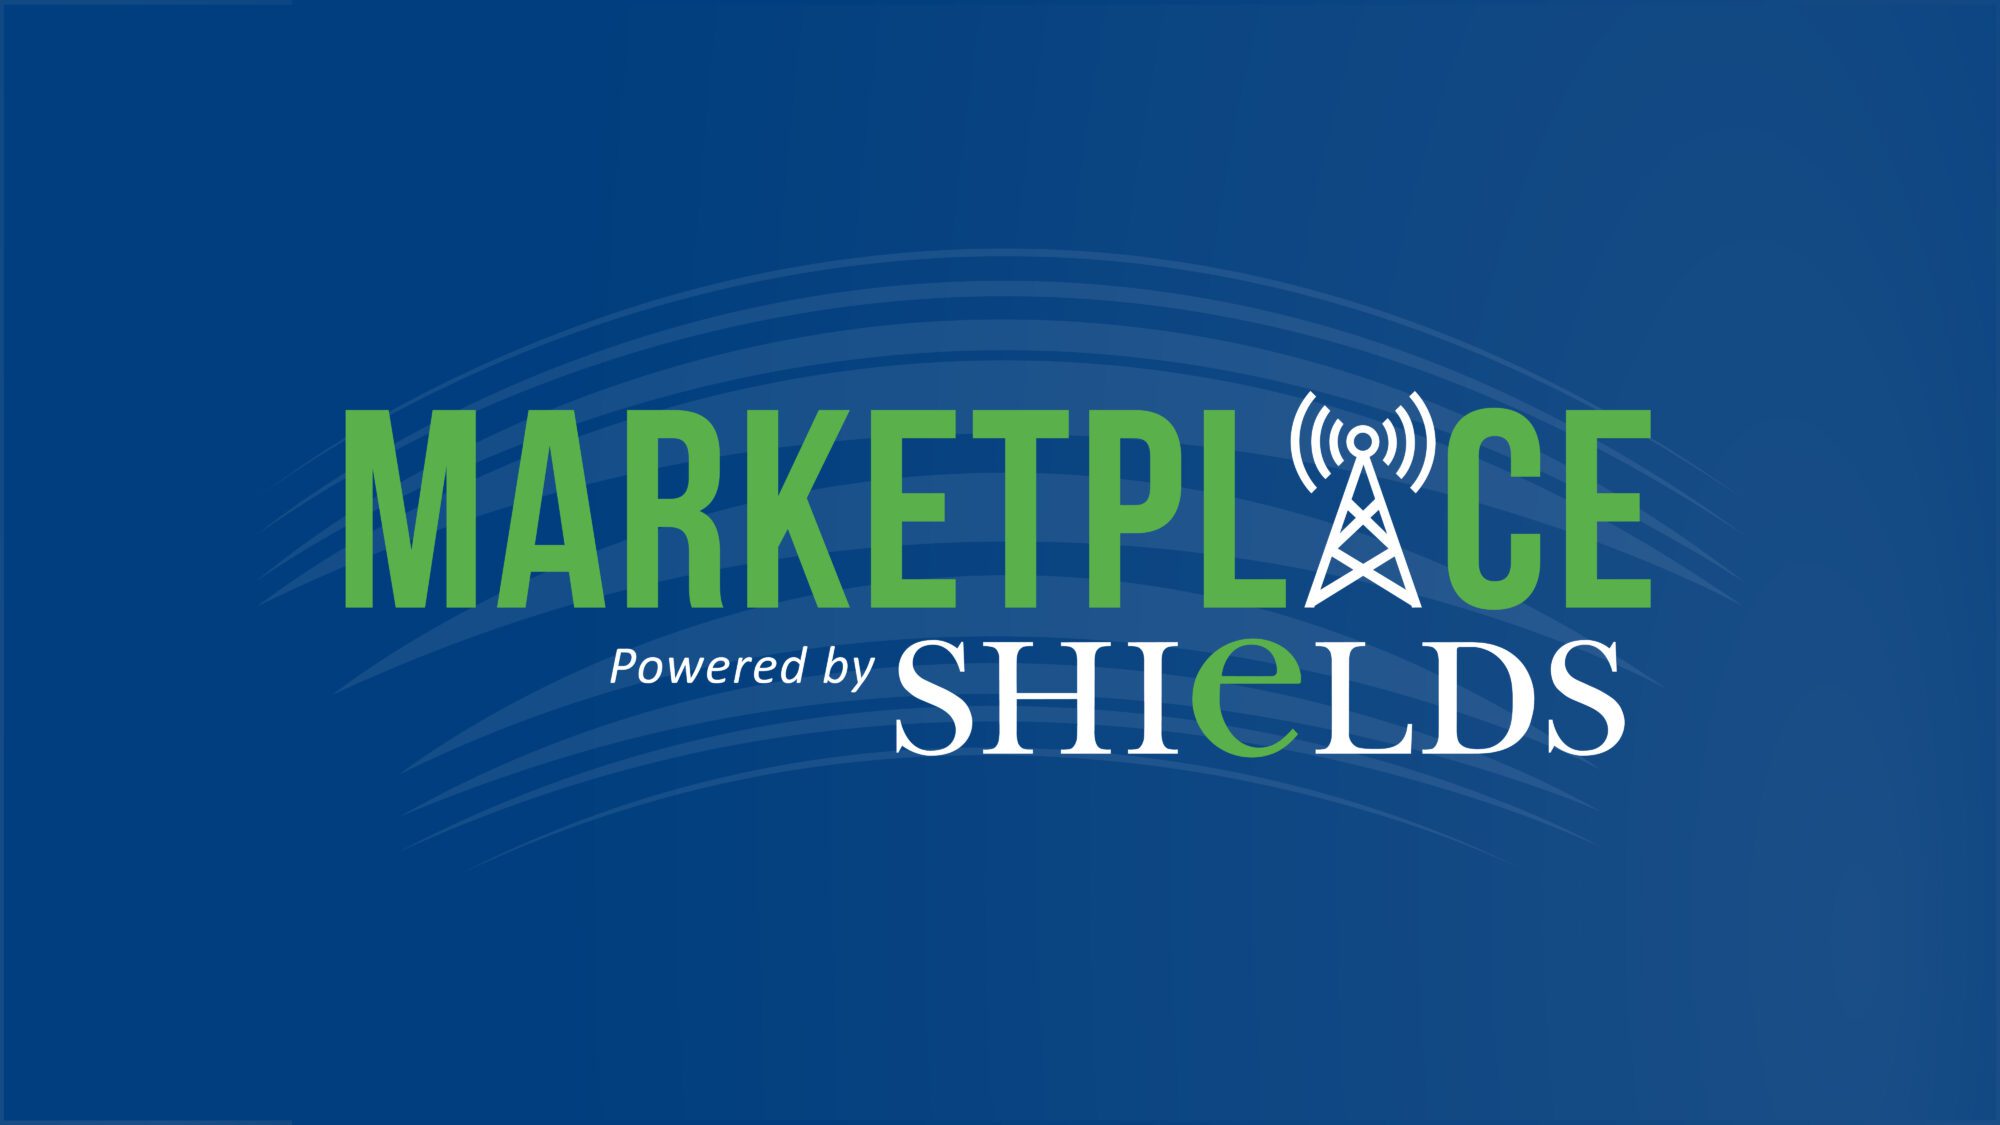 MarketPlace powered by Shields logo